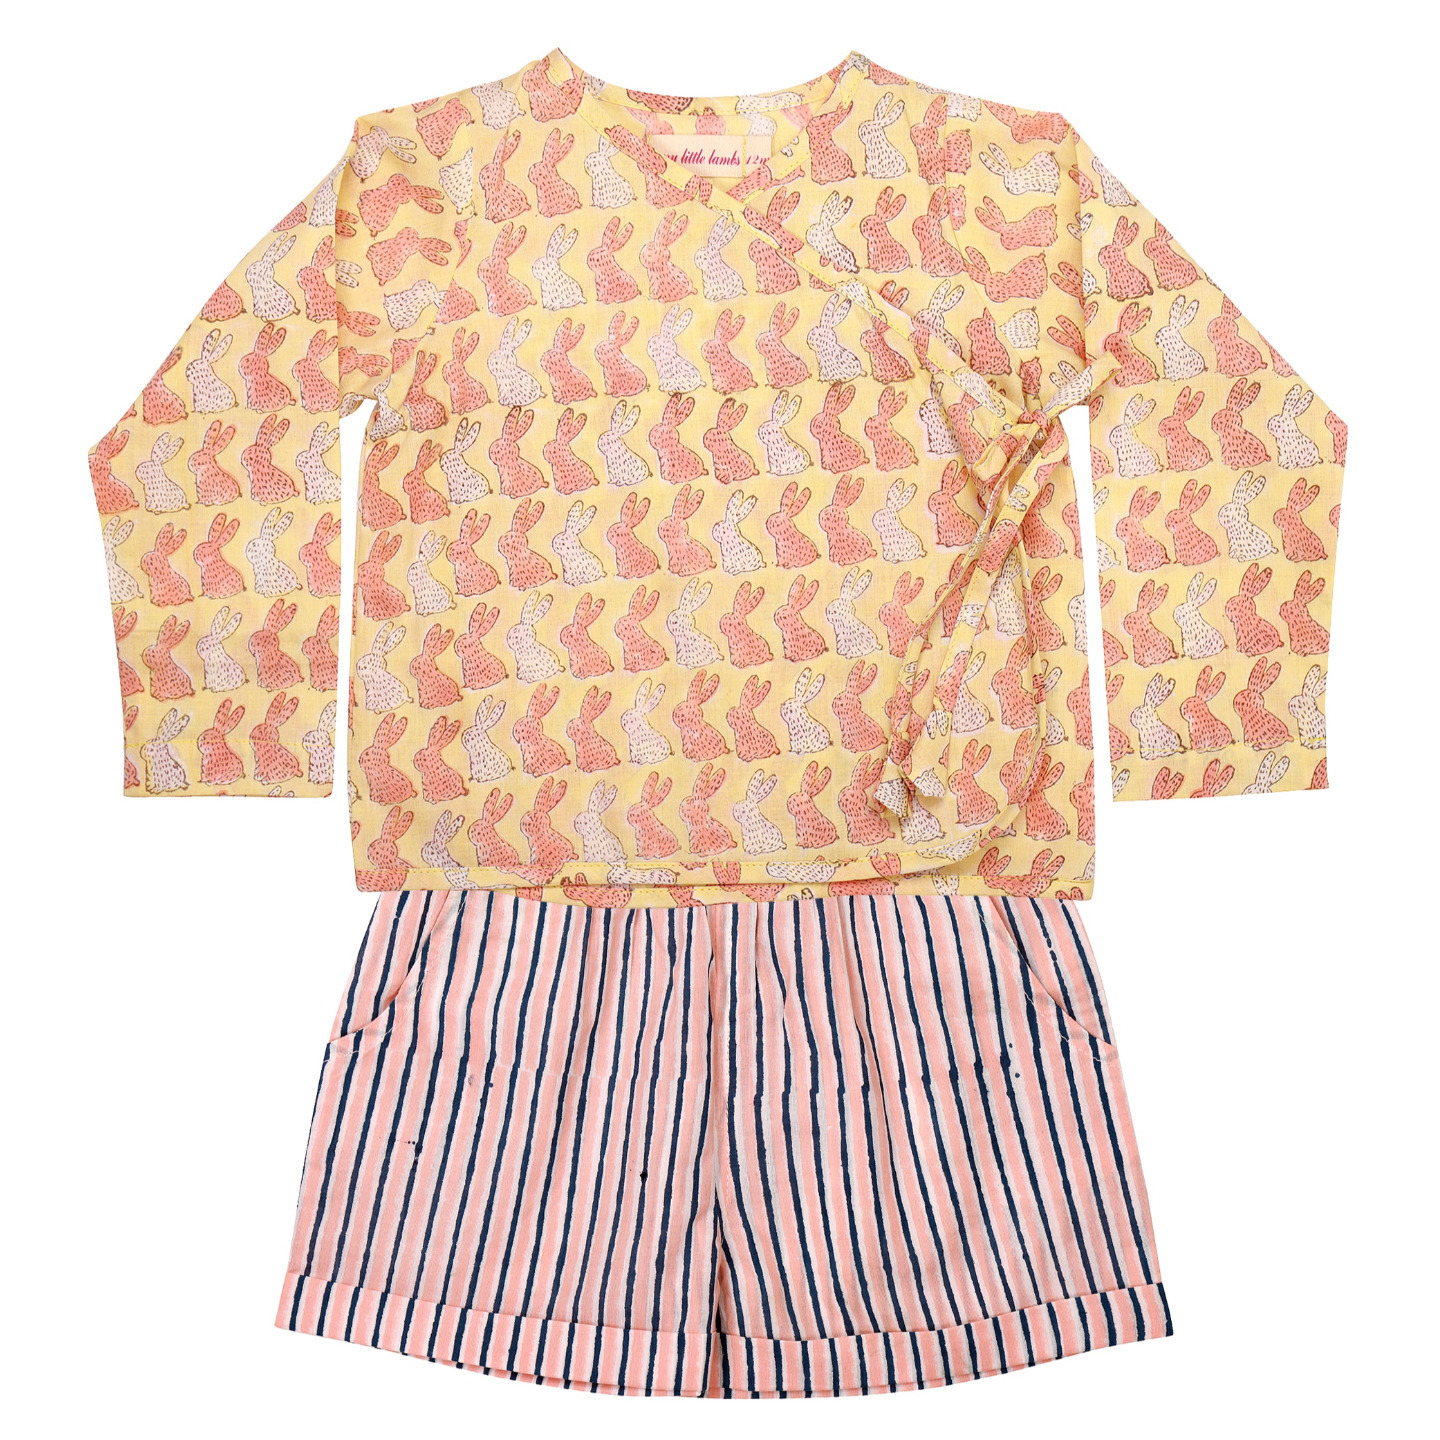 Block Printed Baby Clothing Set Bunny Yellow